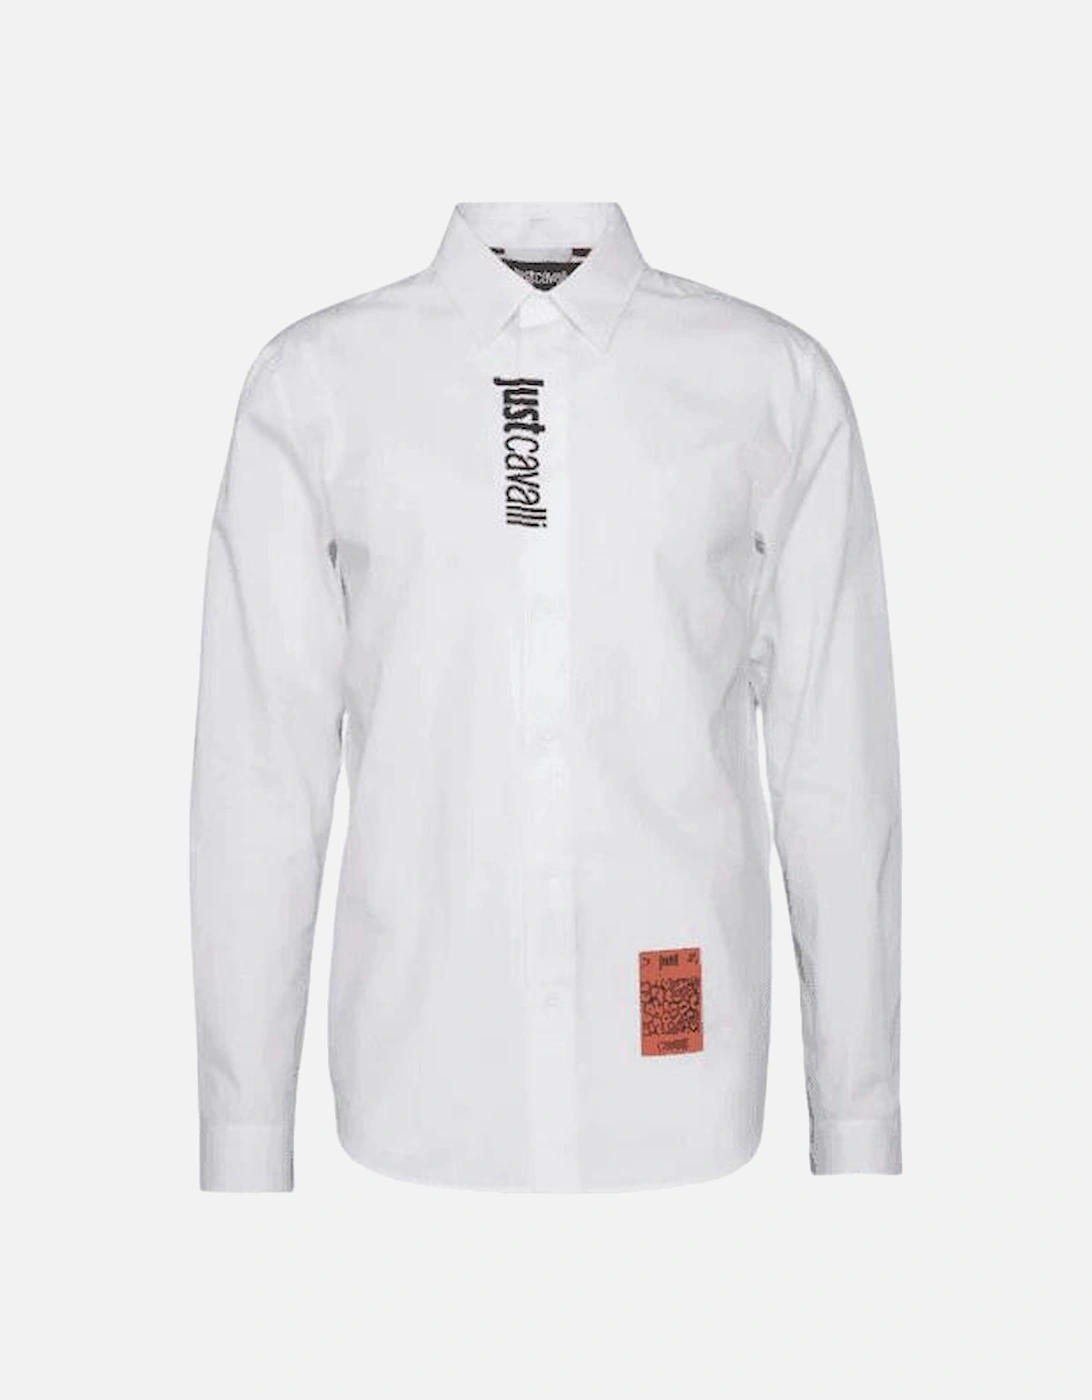 Justlogo Woven White Button Up Shirt, 2 of 1